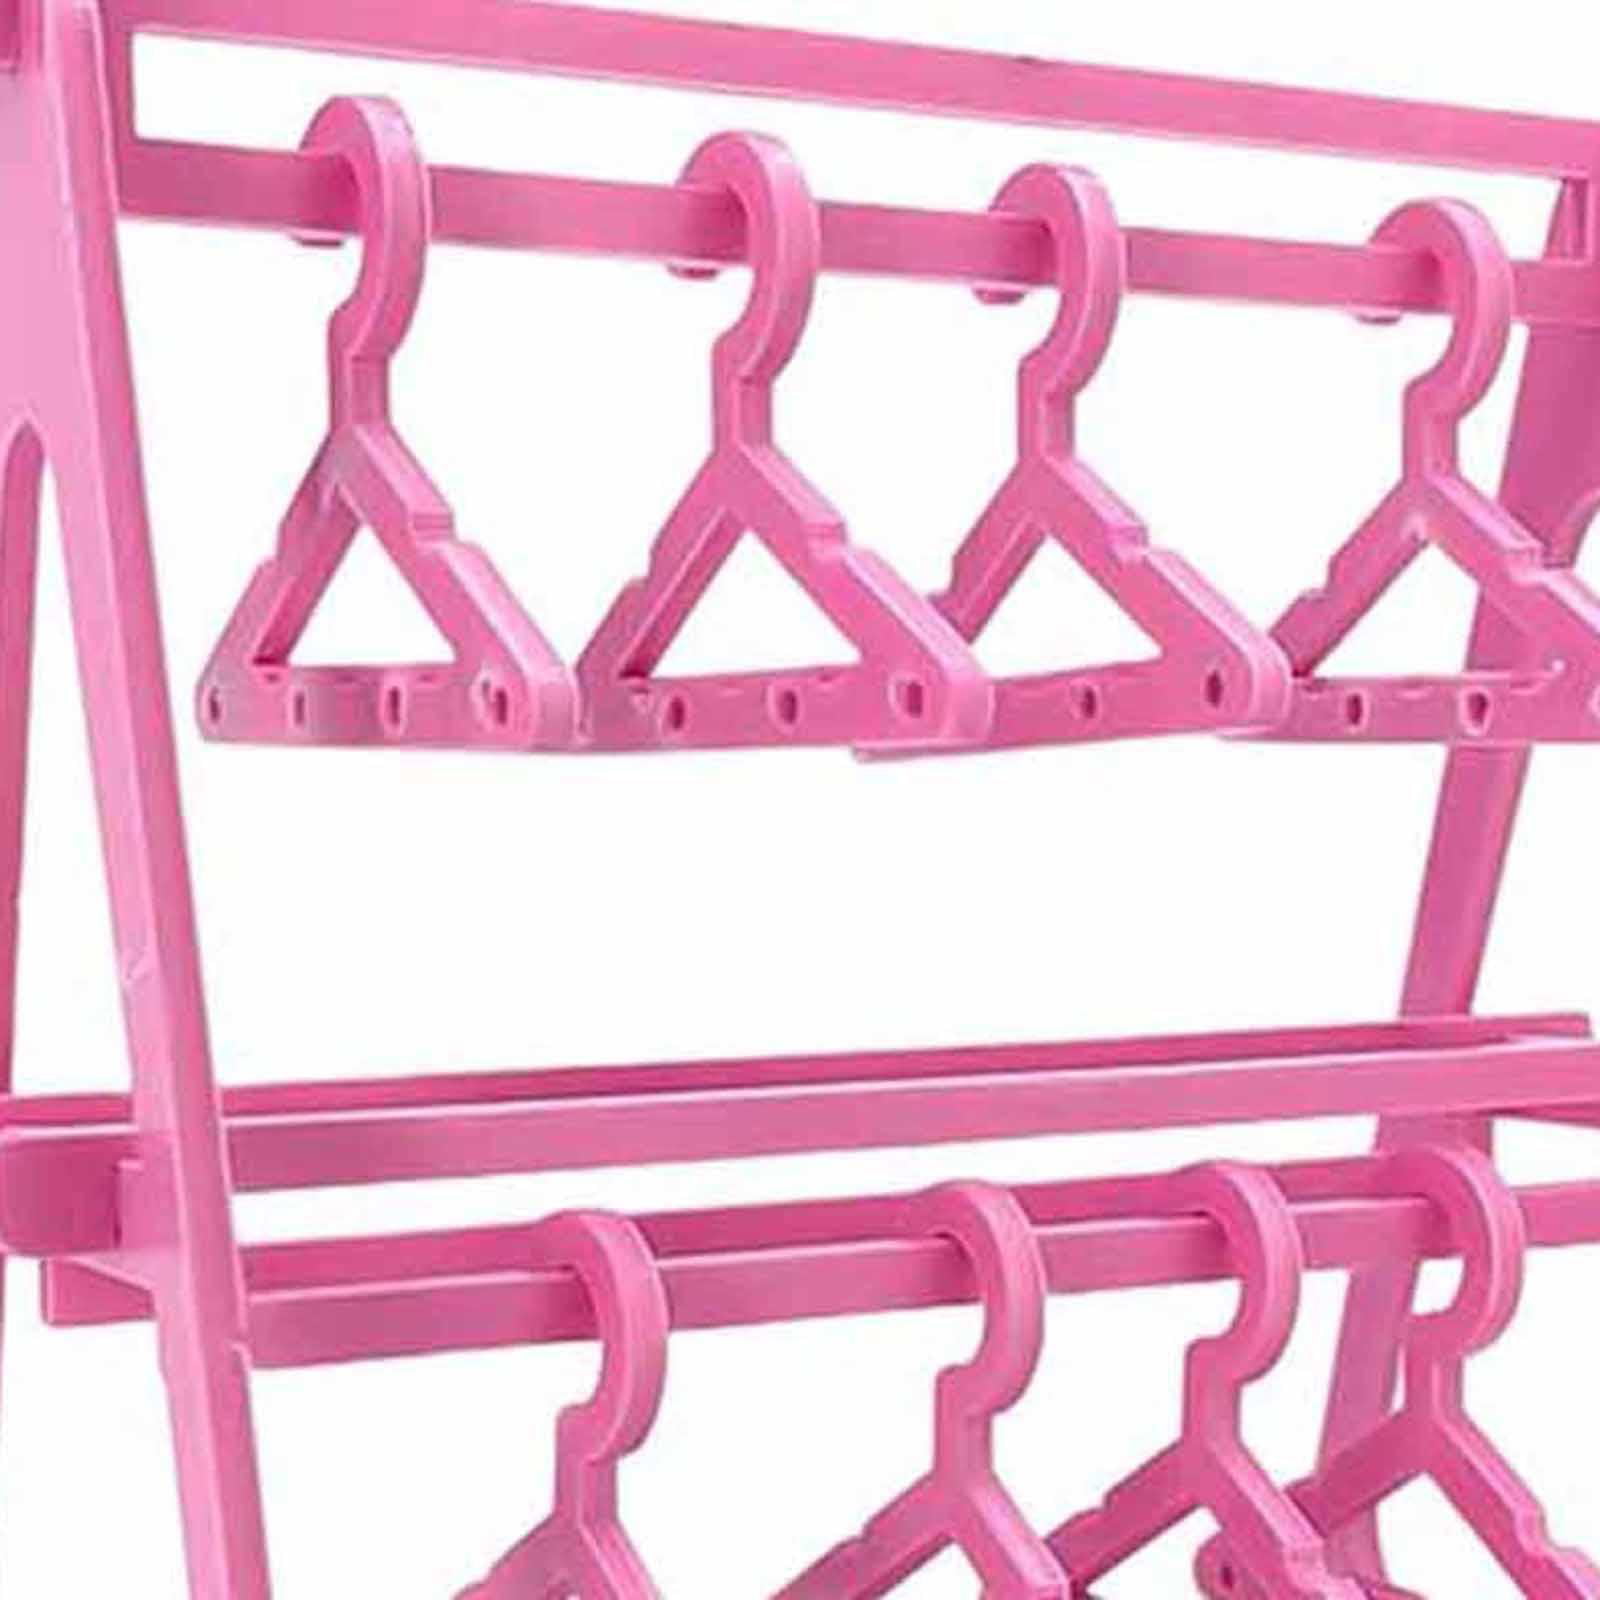 Earring Hanger Stand - Blush Pink – HANGERHUB